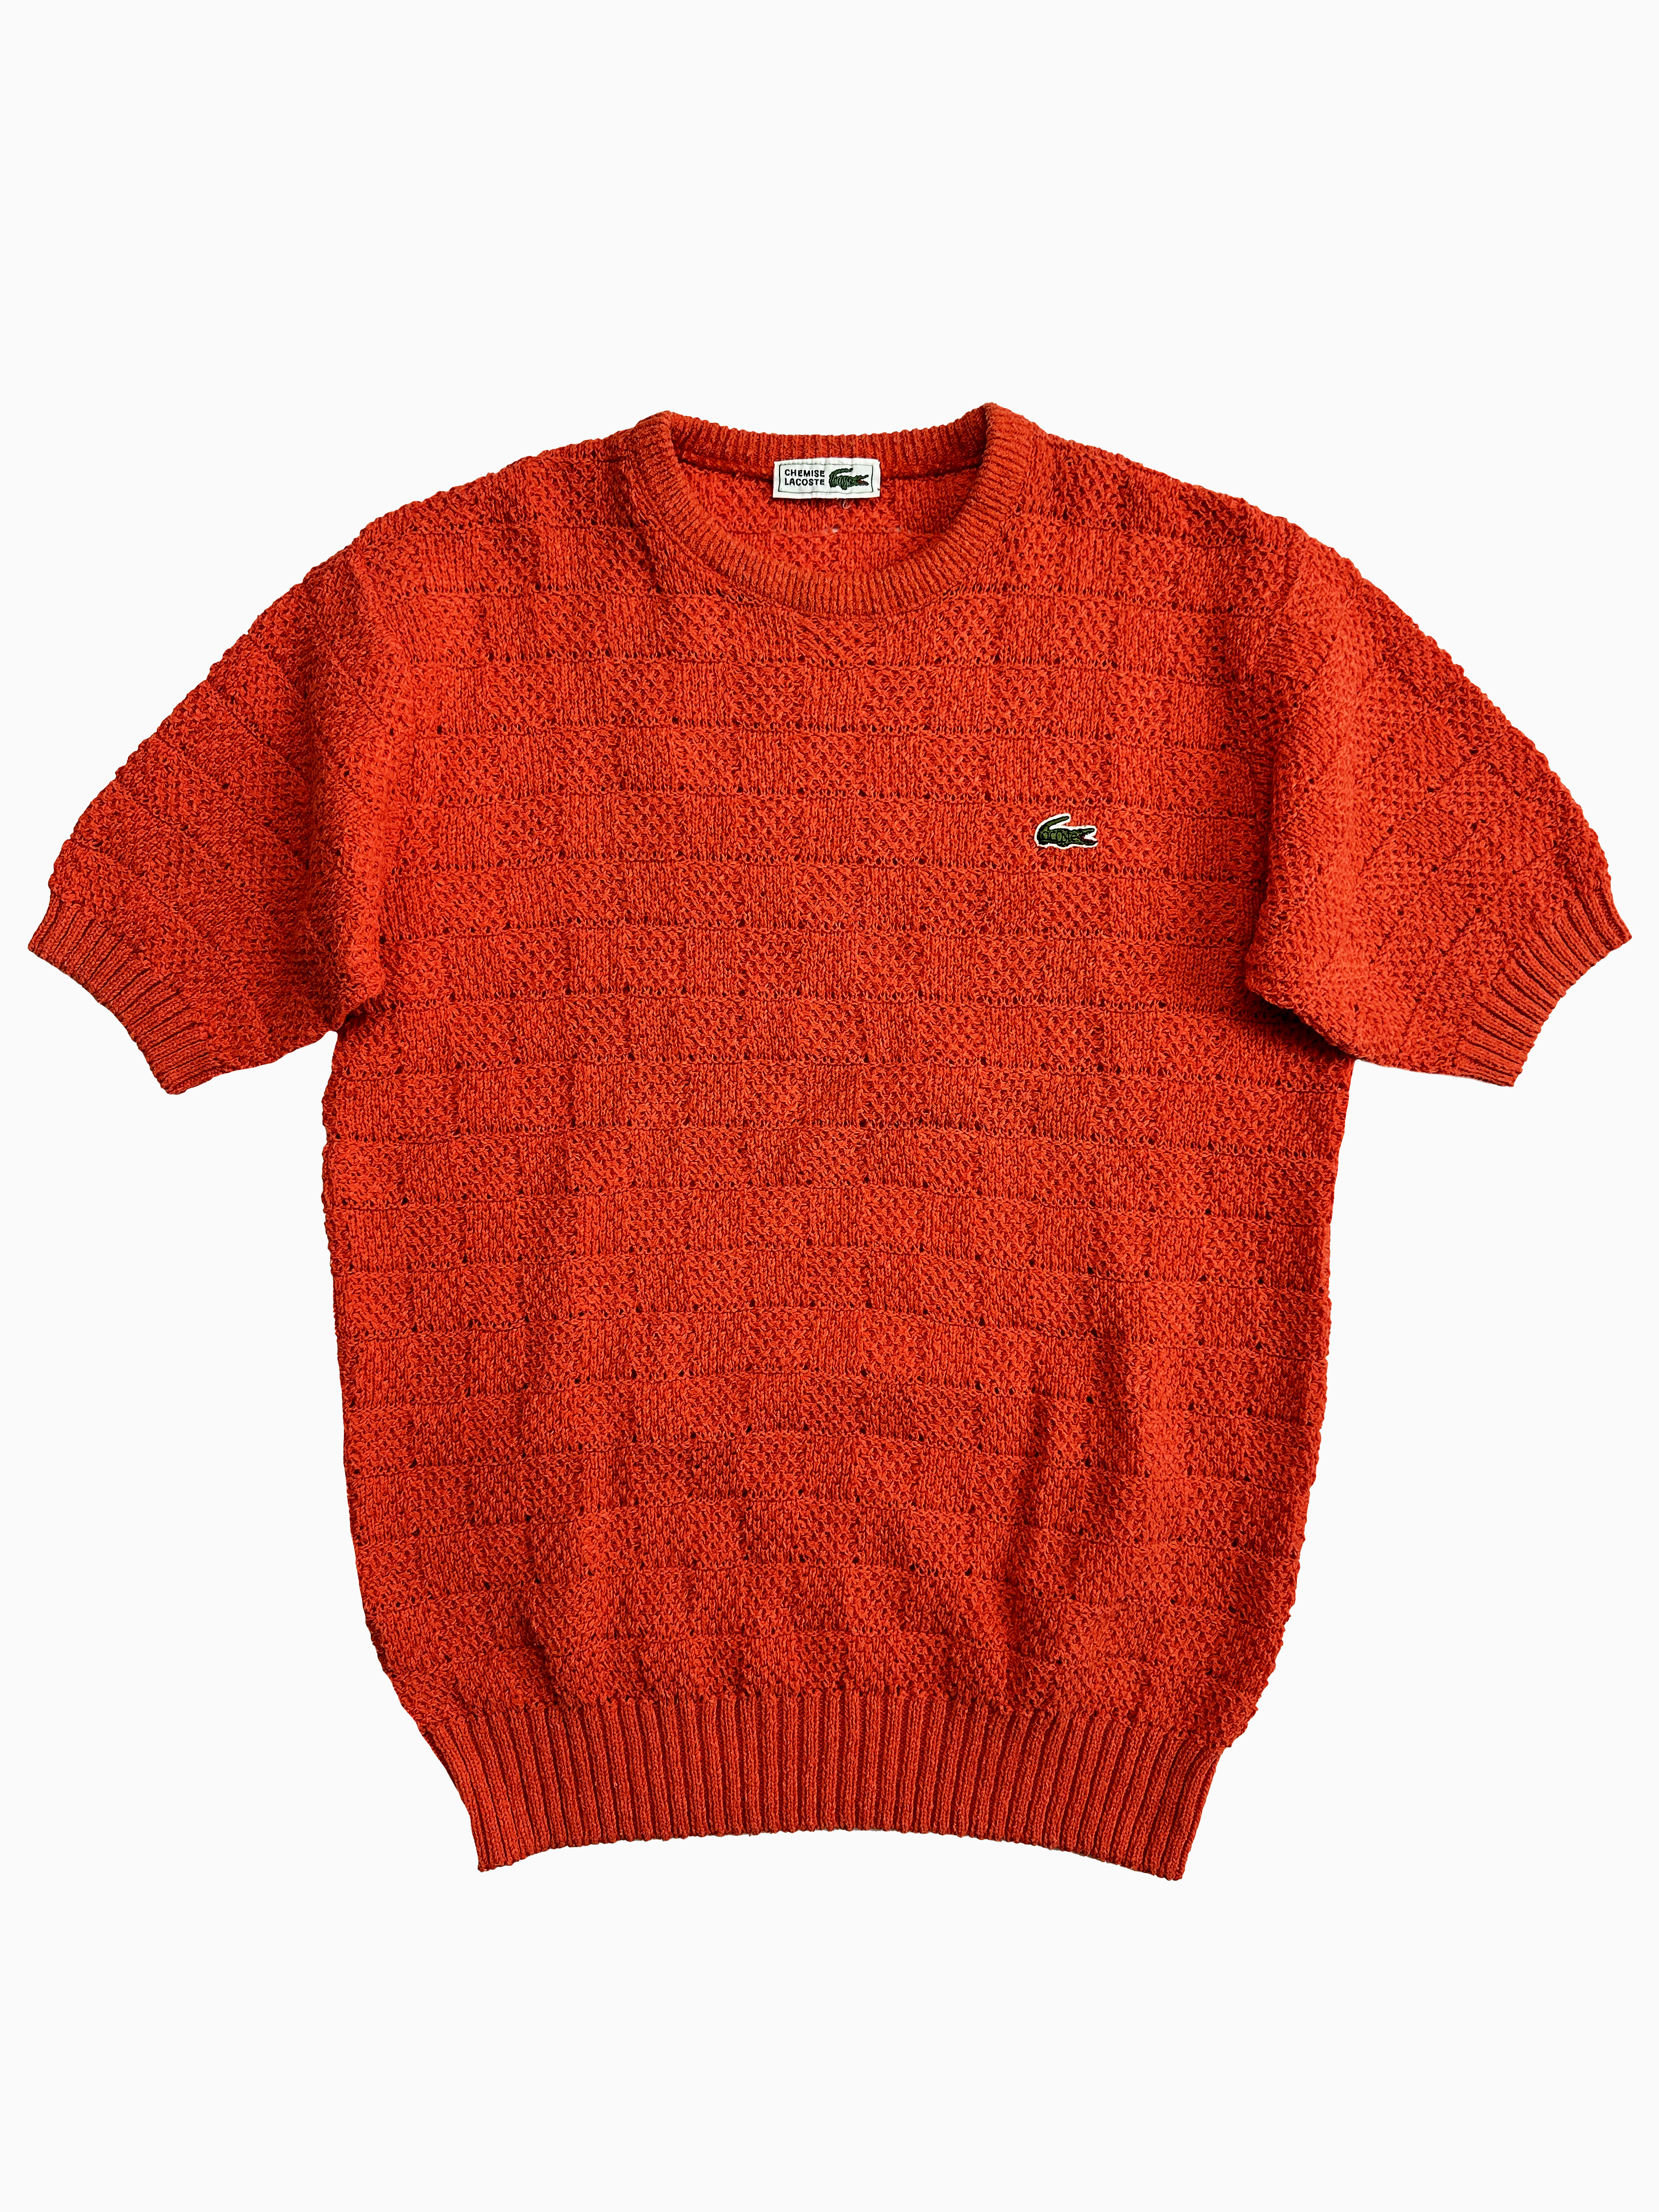 Chemise Lacoste Short Sleeve knit jumper 90's